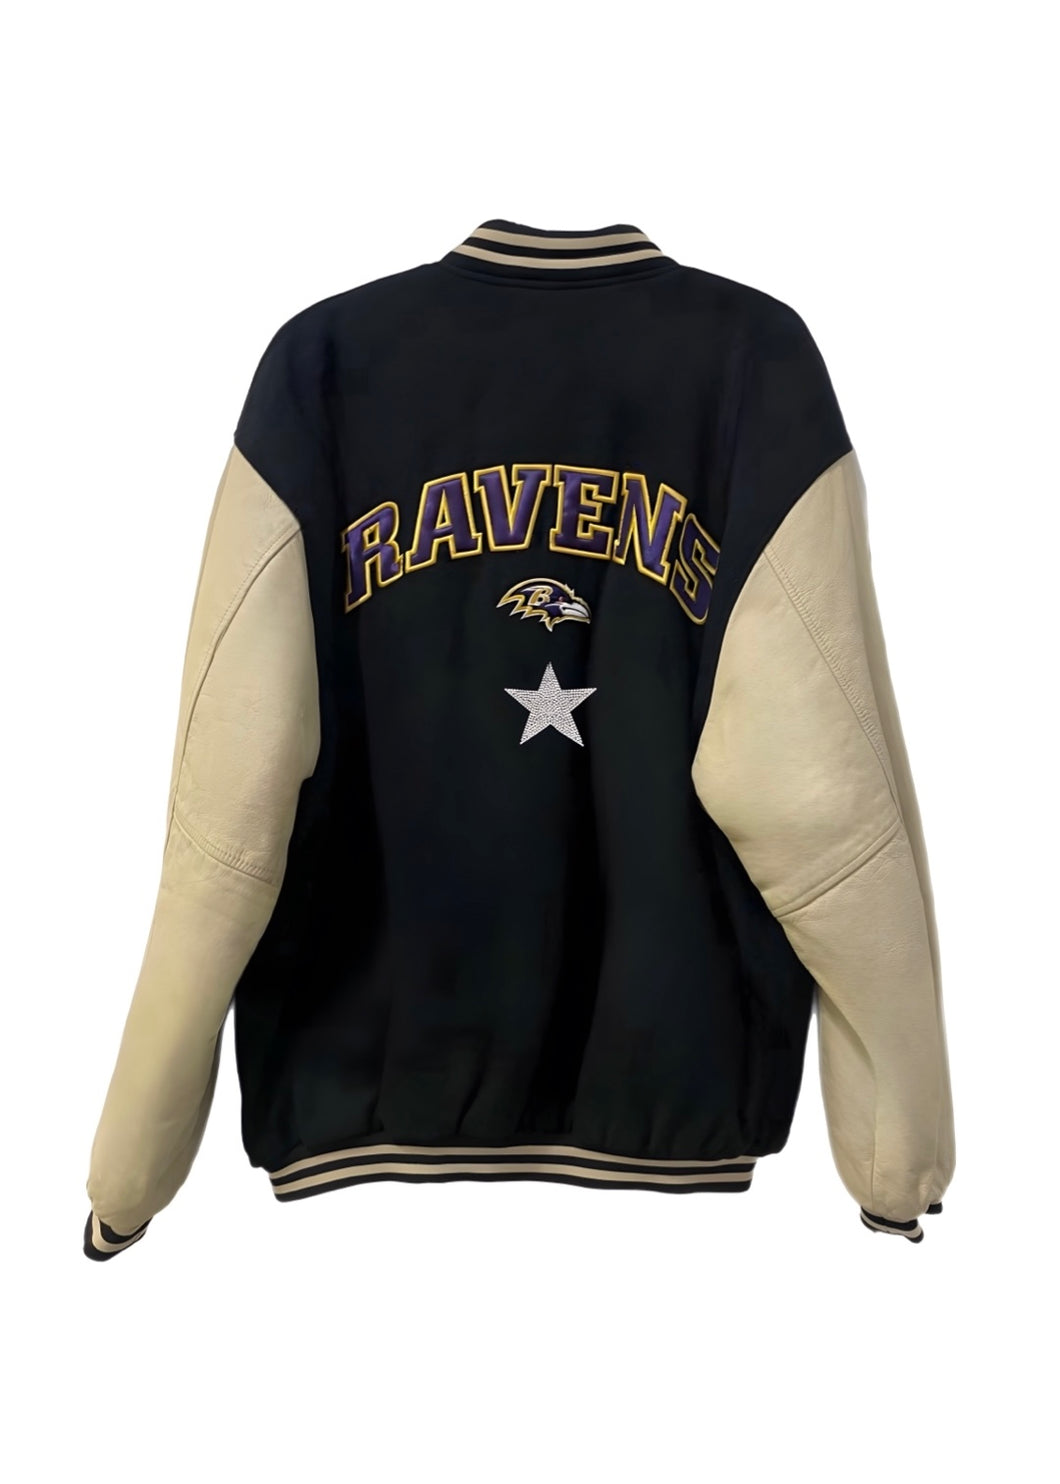 Baltimore Ravens, Football One of a KIND Vintage “Rare Find” Varsity Jacket with Crystal Star Design